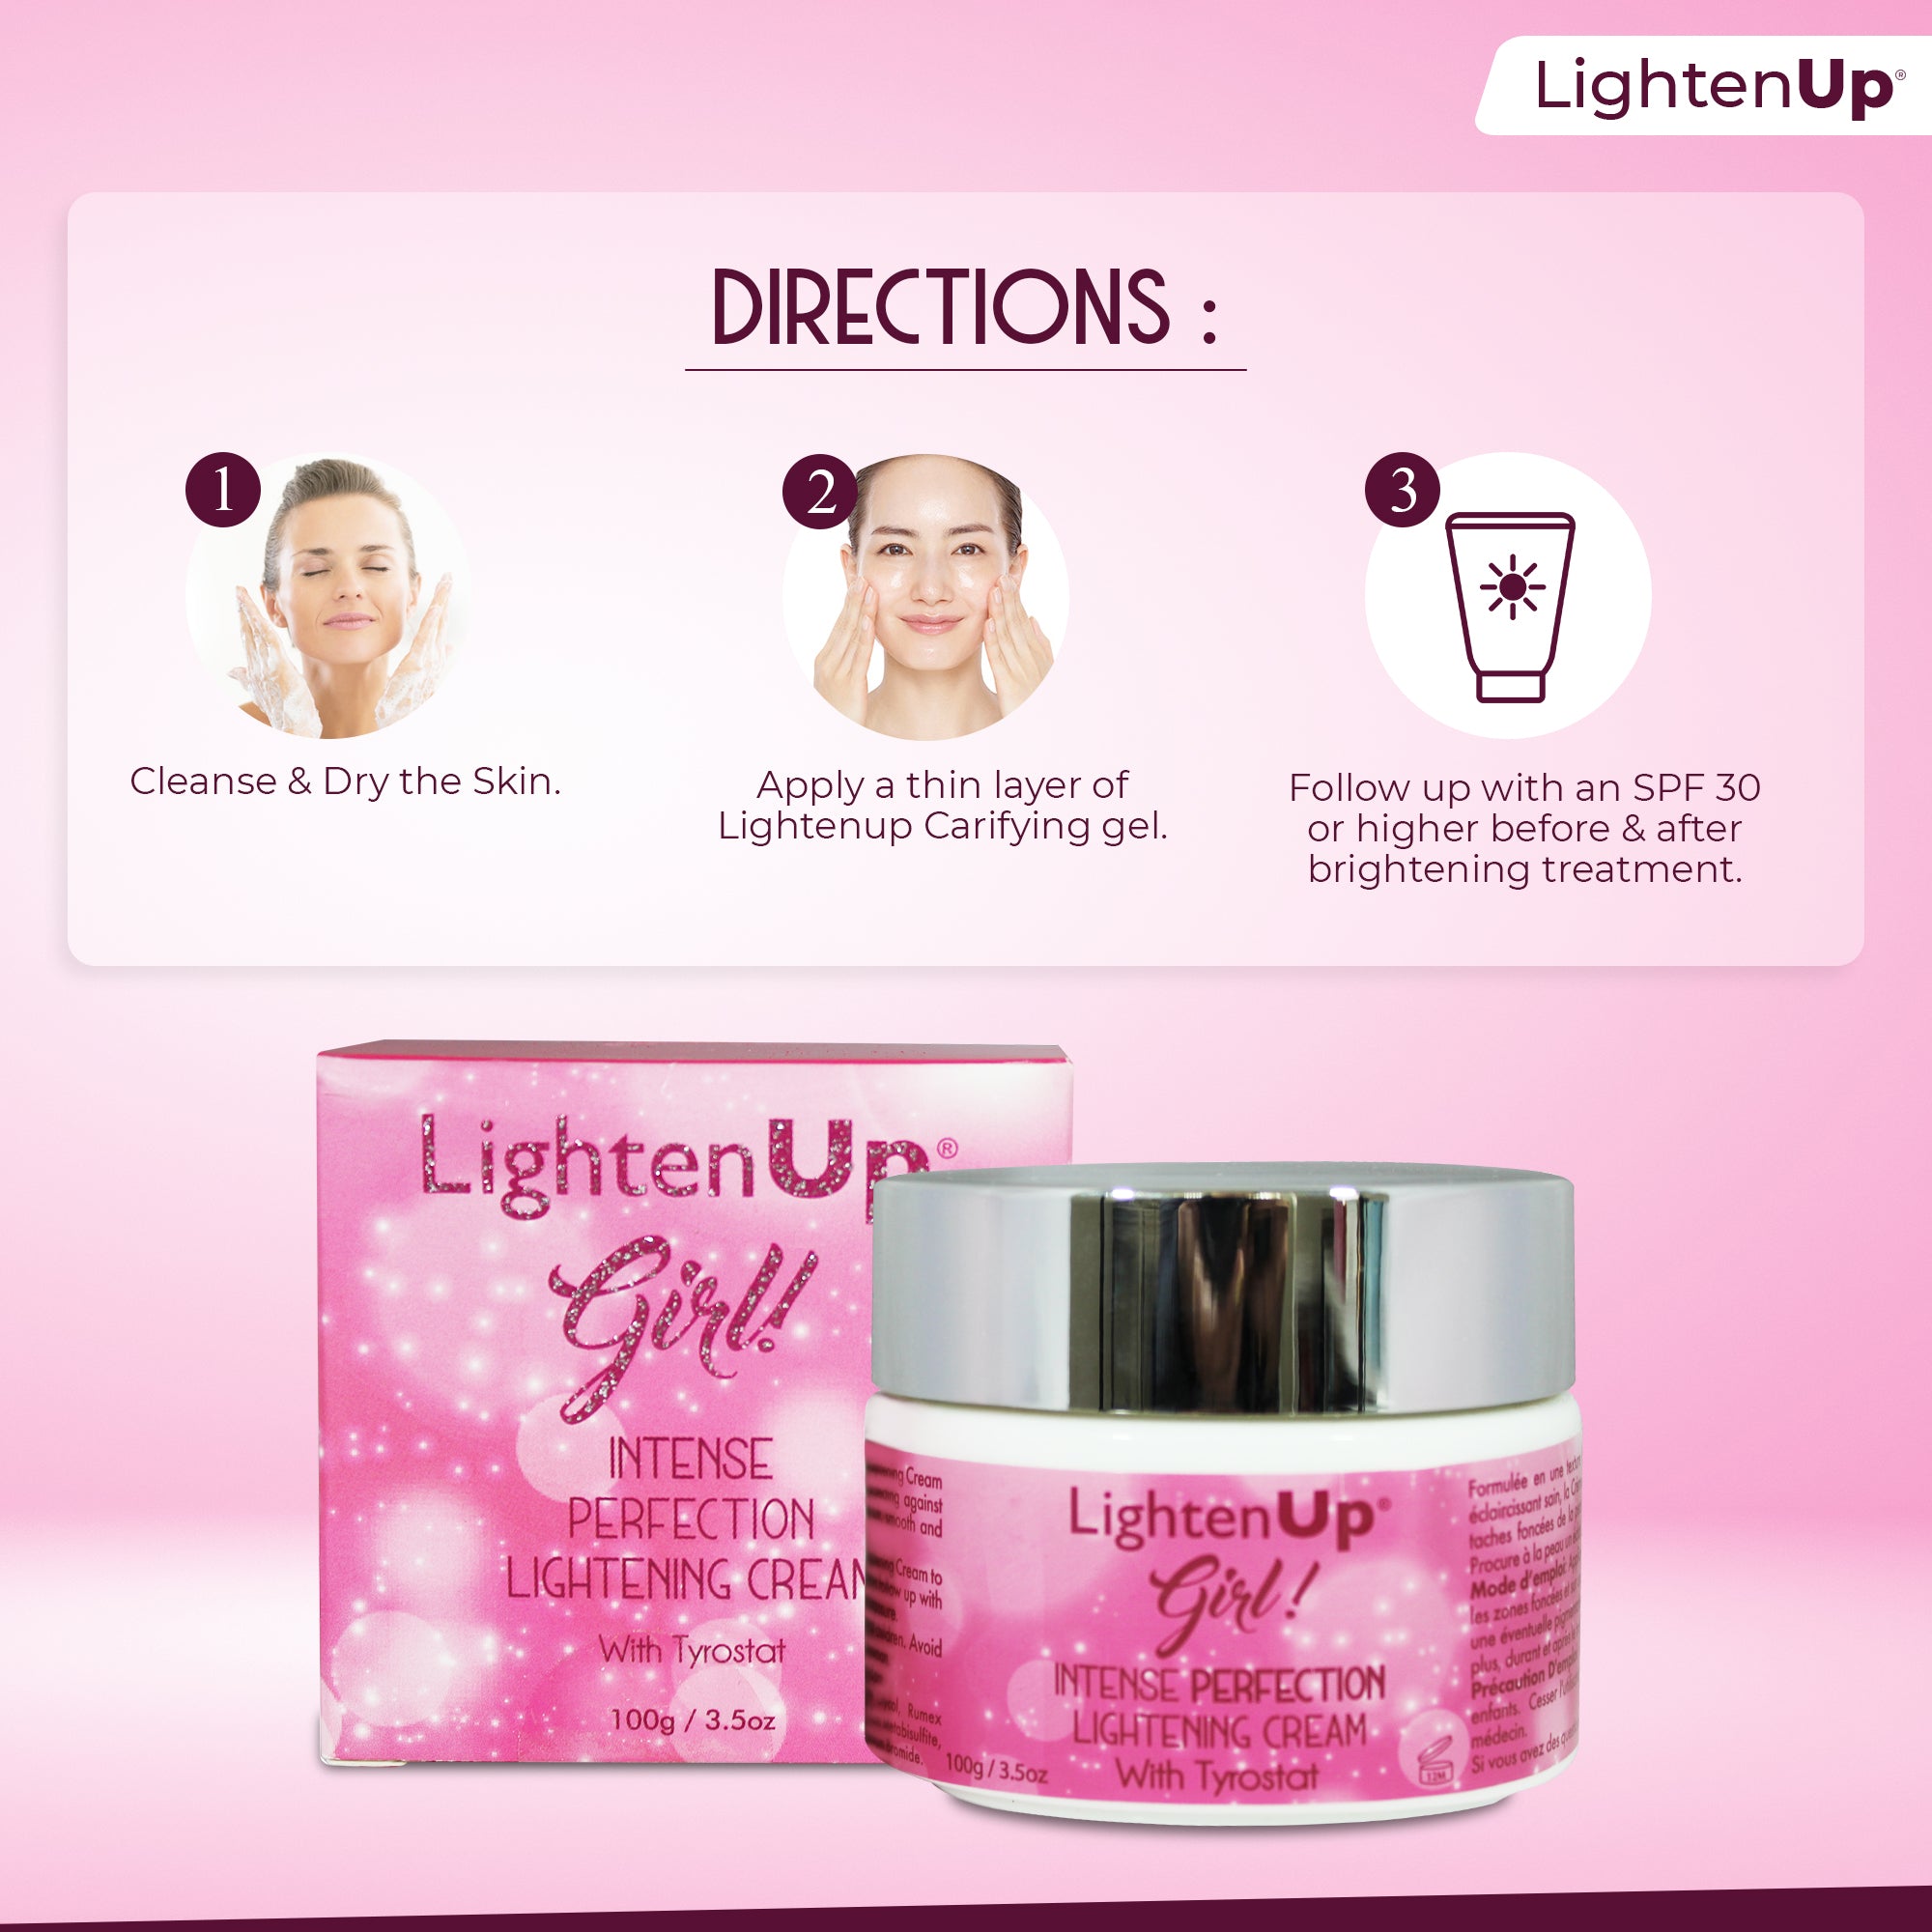 Omic LightenUp Girl! Intense Perfection Lightening Cream - 100g / 3.5 Oz